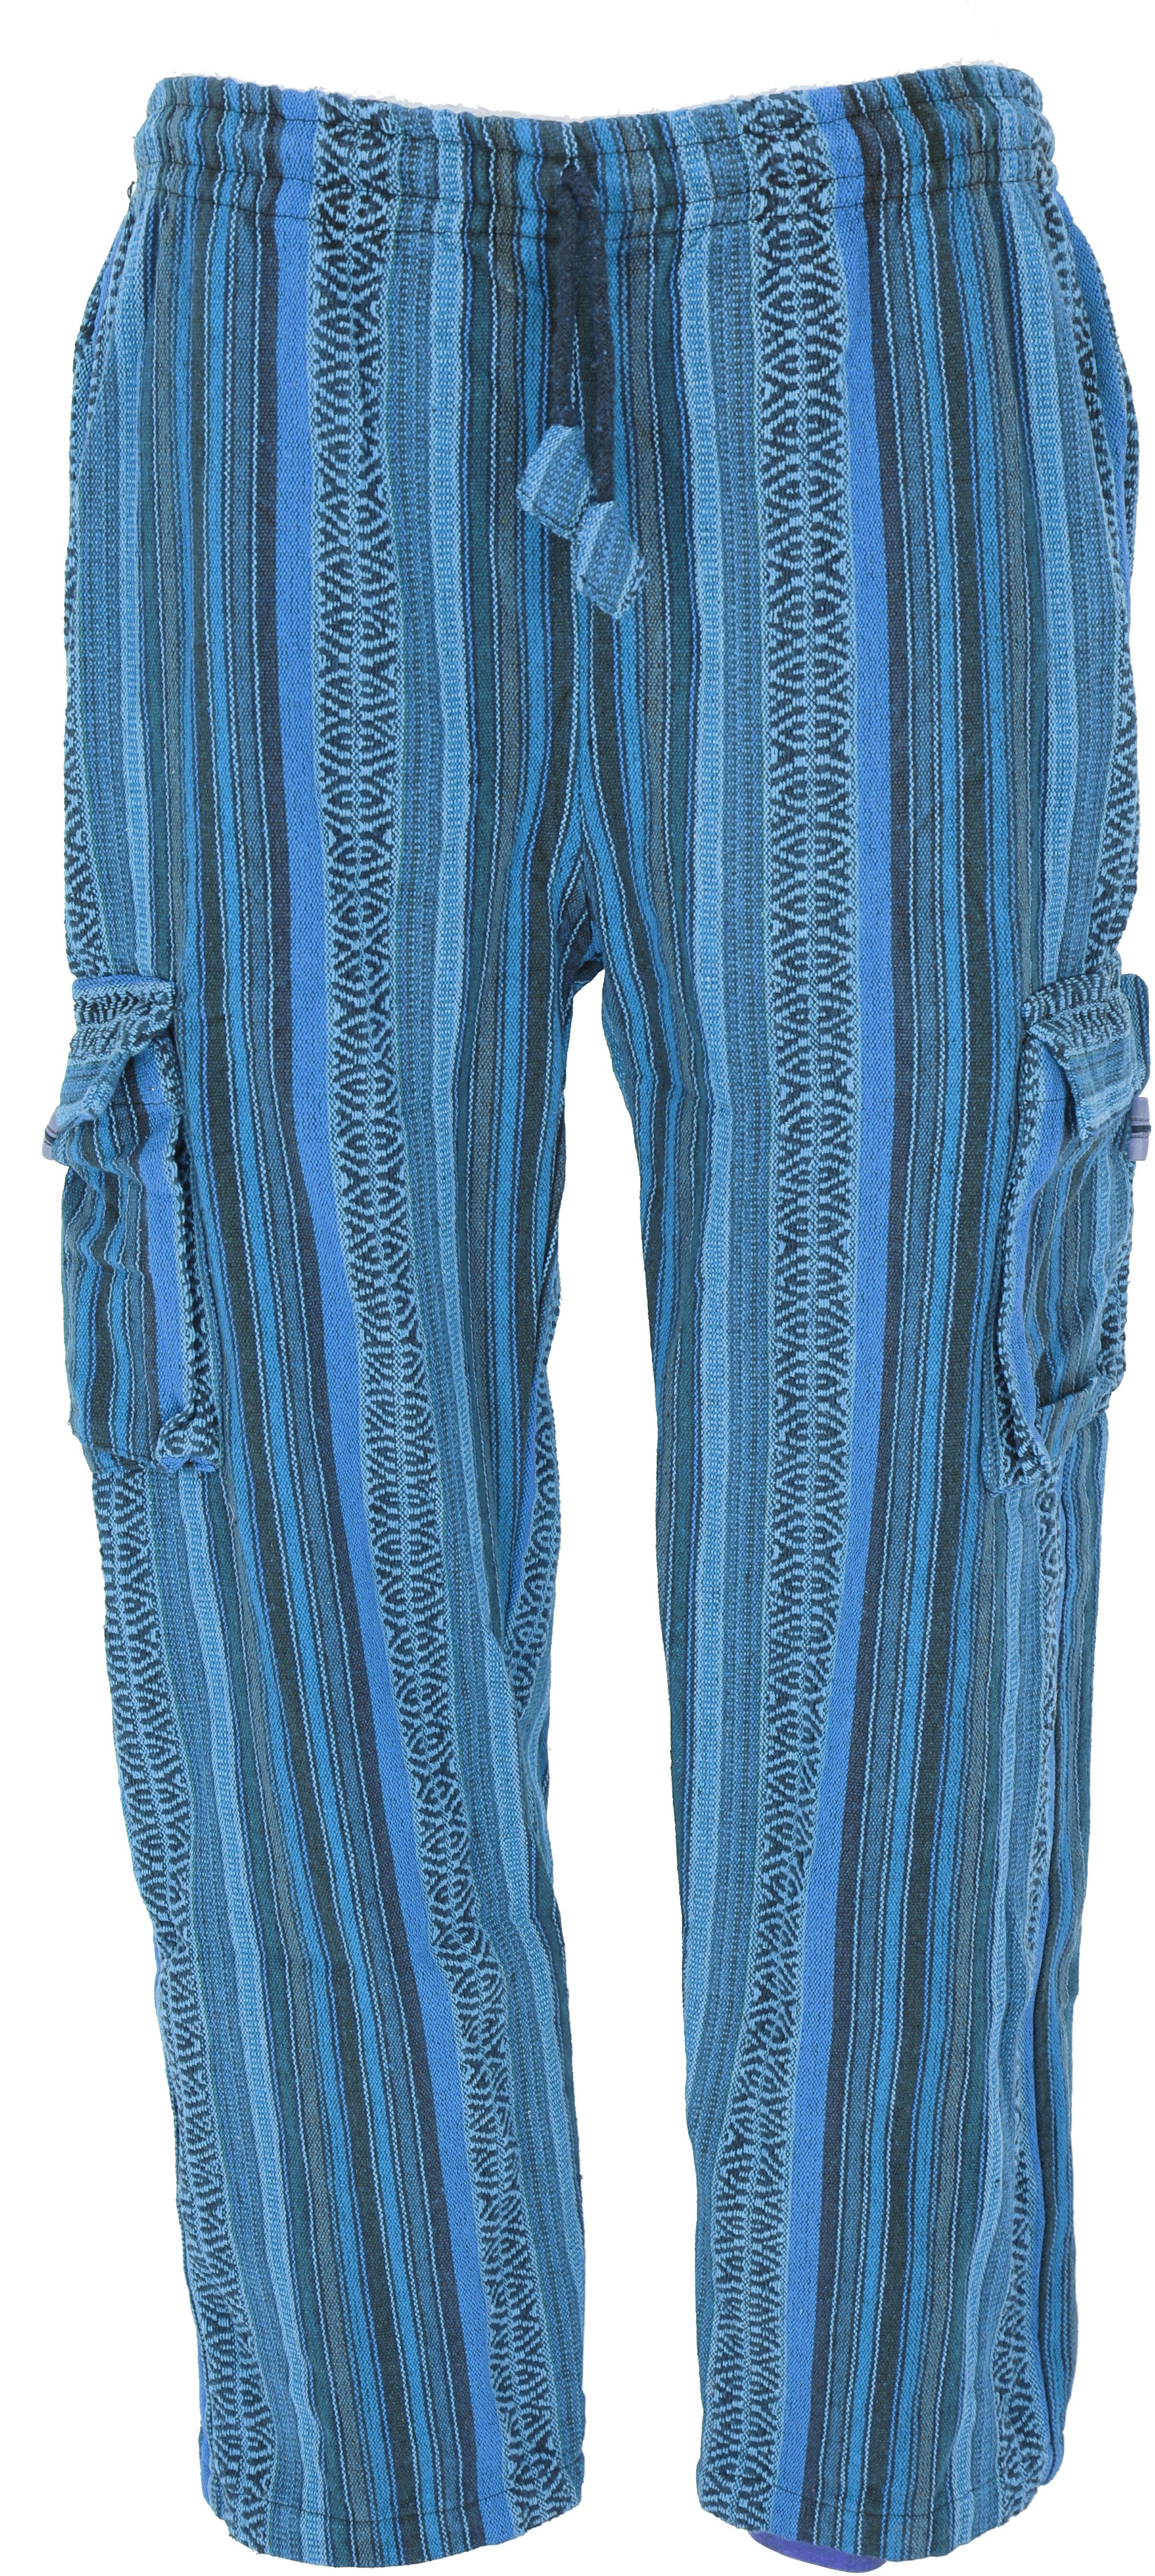 Guru-Shop Hose, alternative - Style, Bekleidung Hippie, Hose Ethno Loose Relaxhose Goa Wohlfühlhose, blau fit